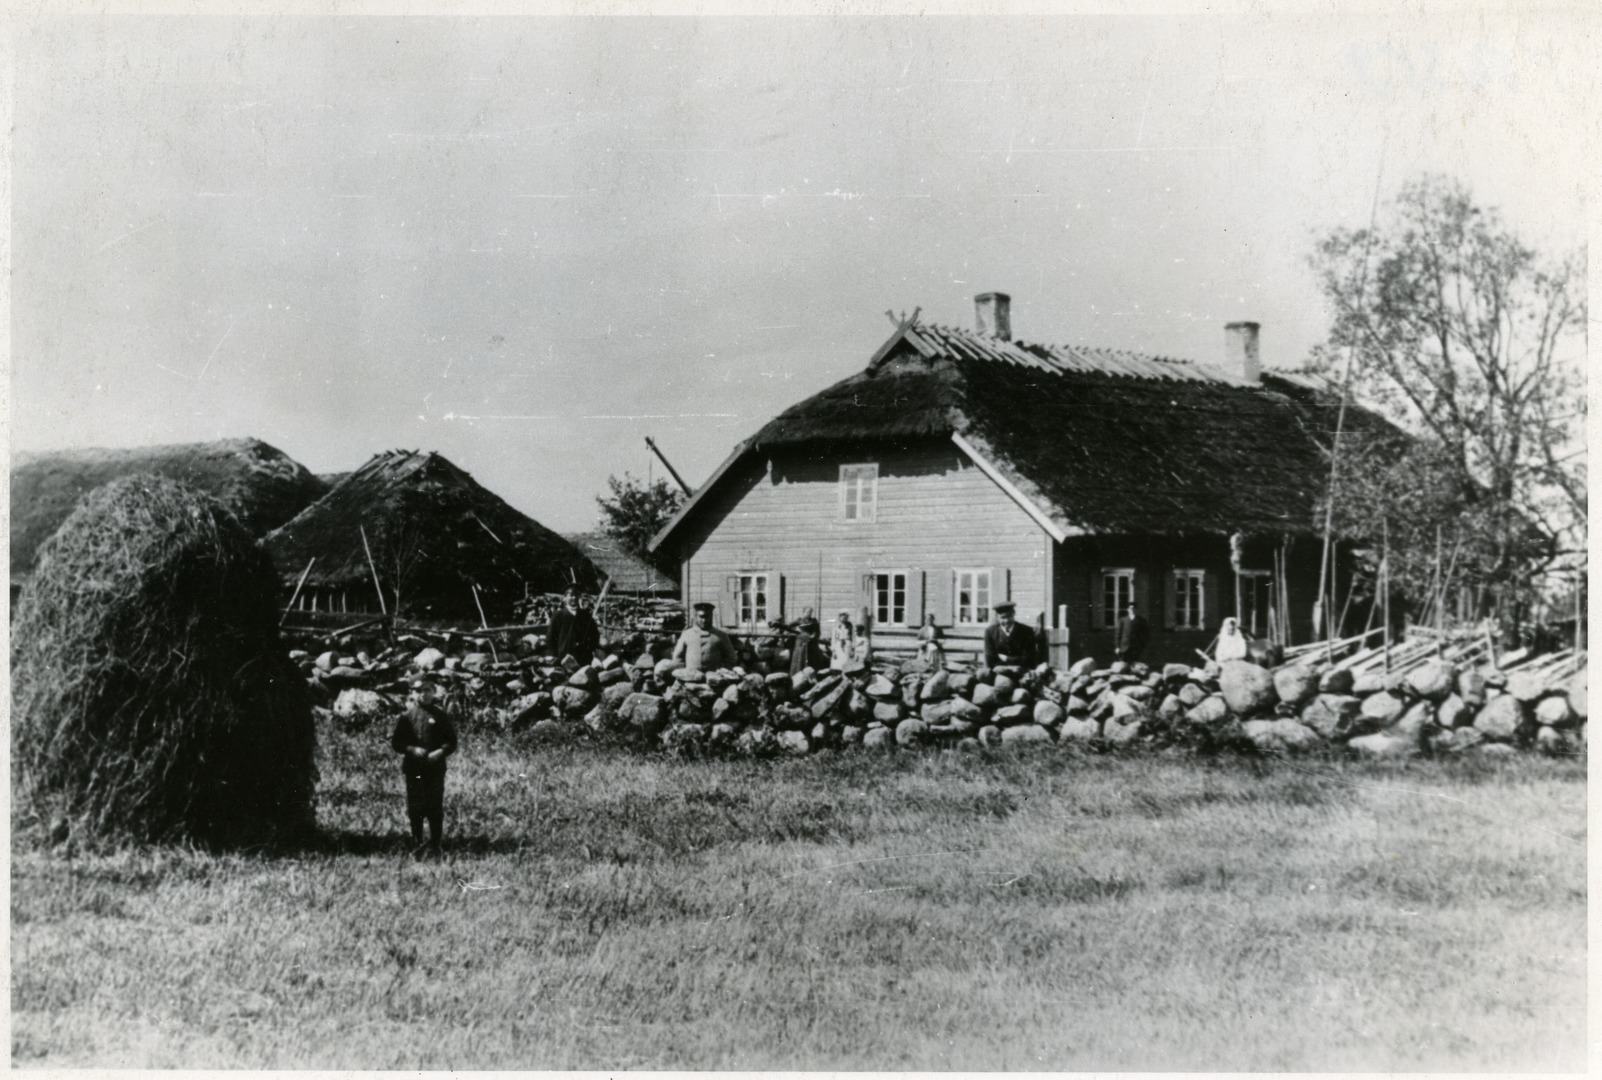 Schoolhouse in Estonia in 1900